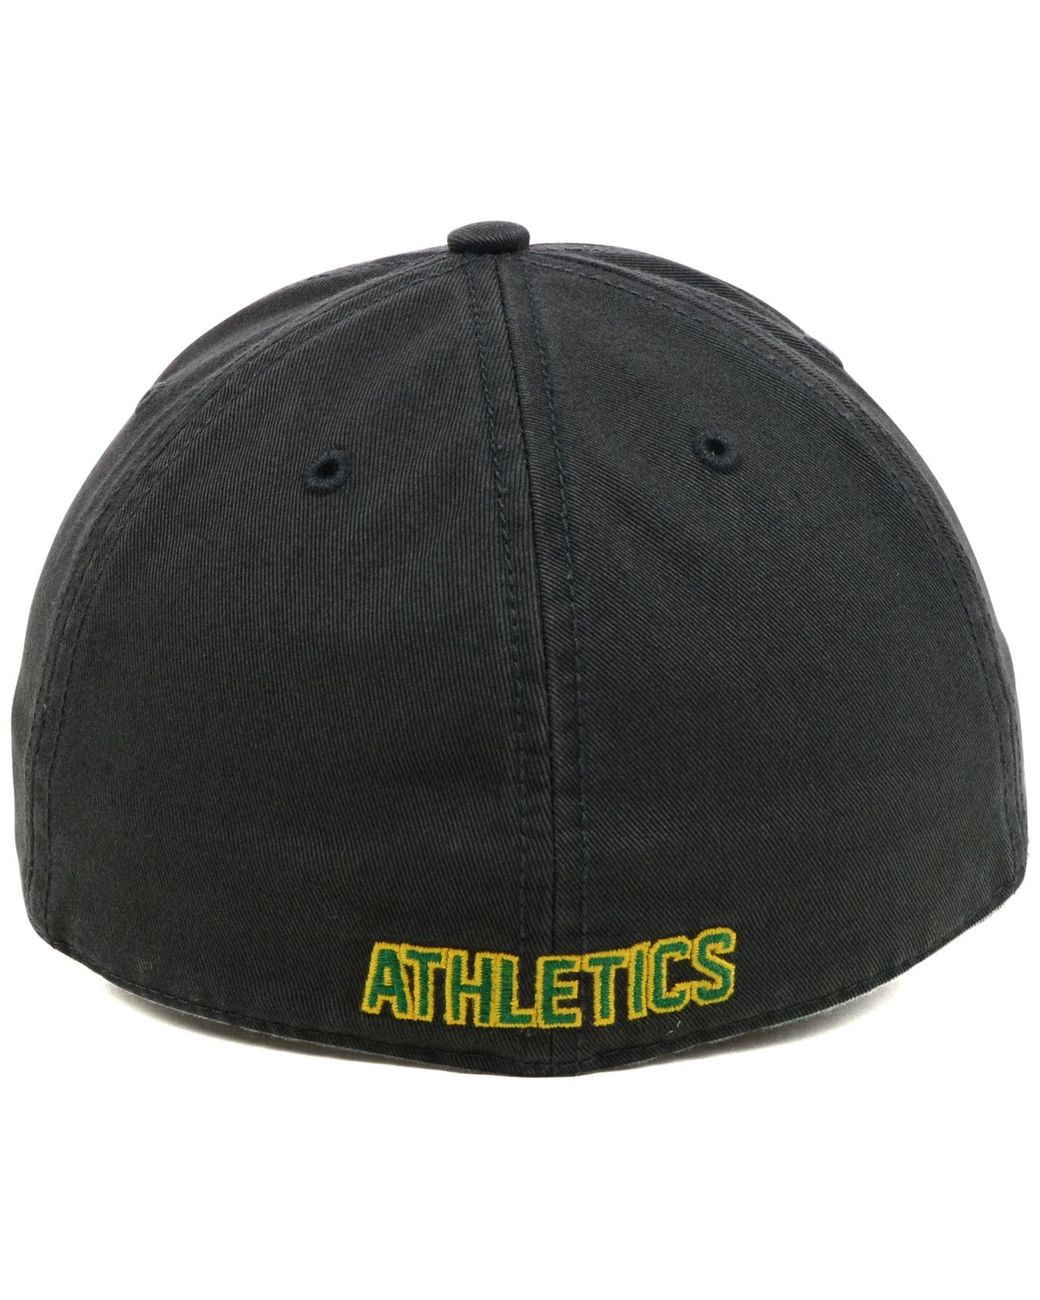 Kansas Jayhawks Trawler Mens Baseball Style Hat Cap 47 Brand OHT BlackWhite  NCAA